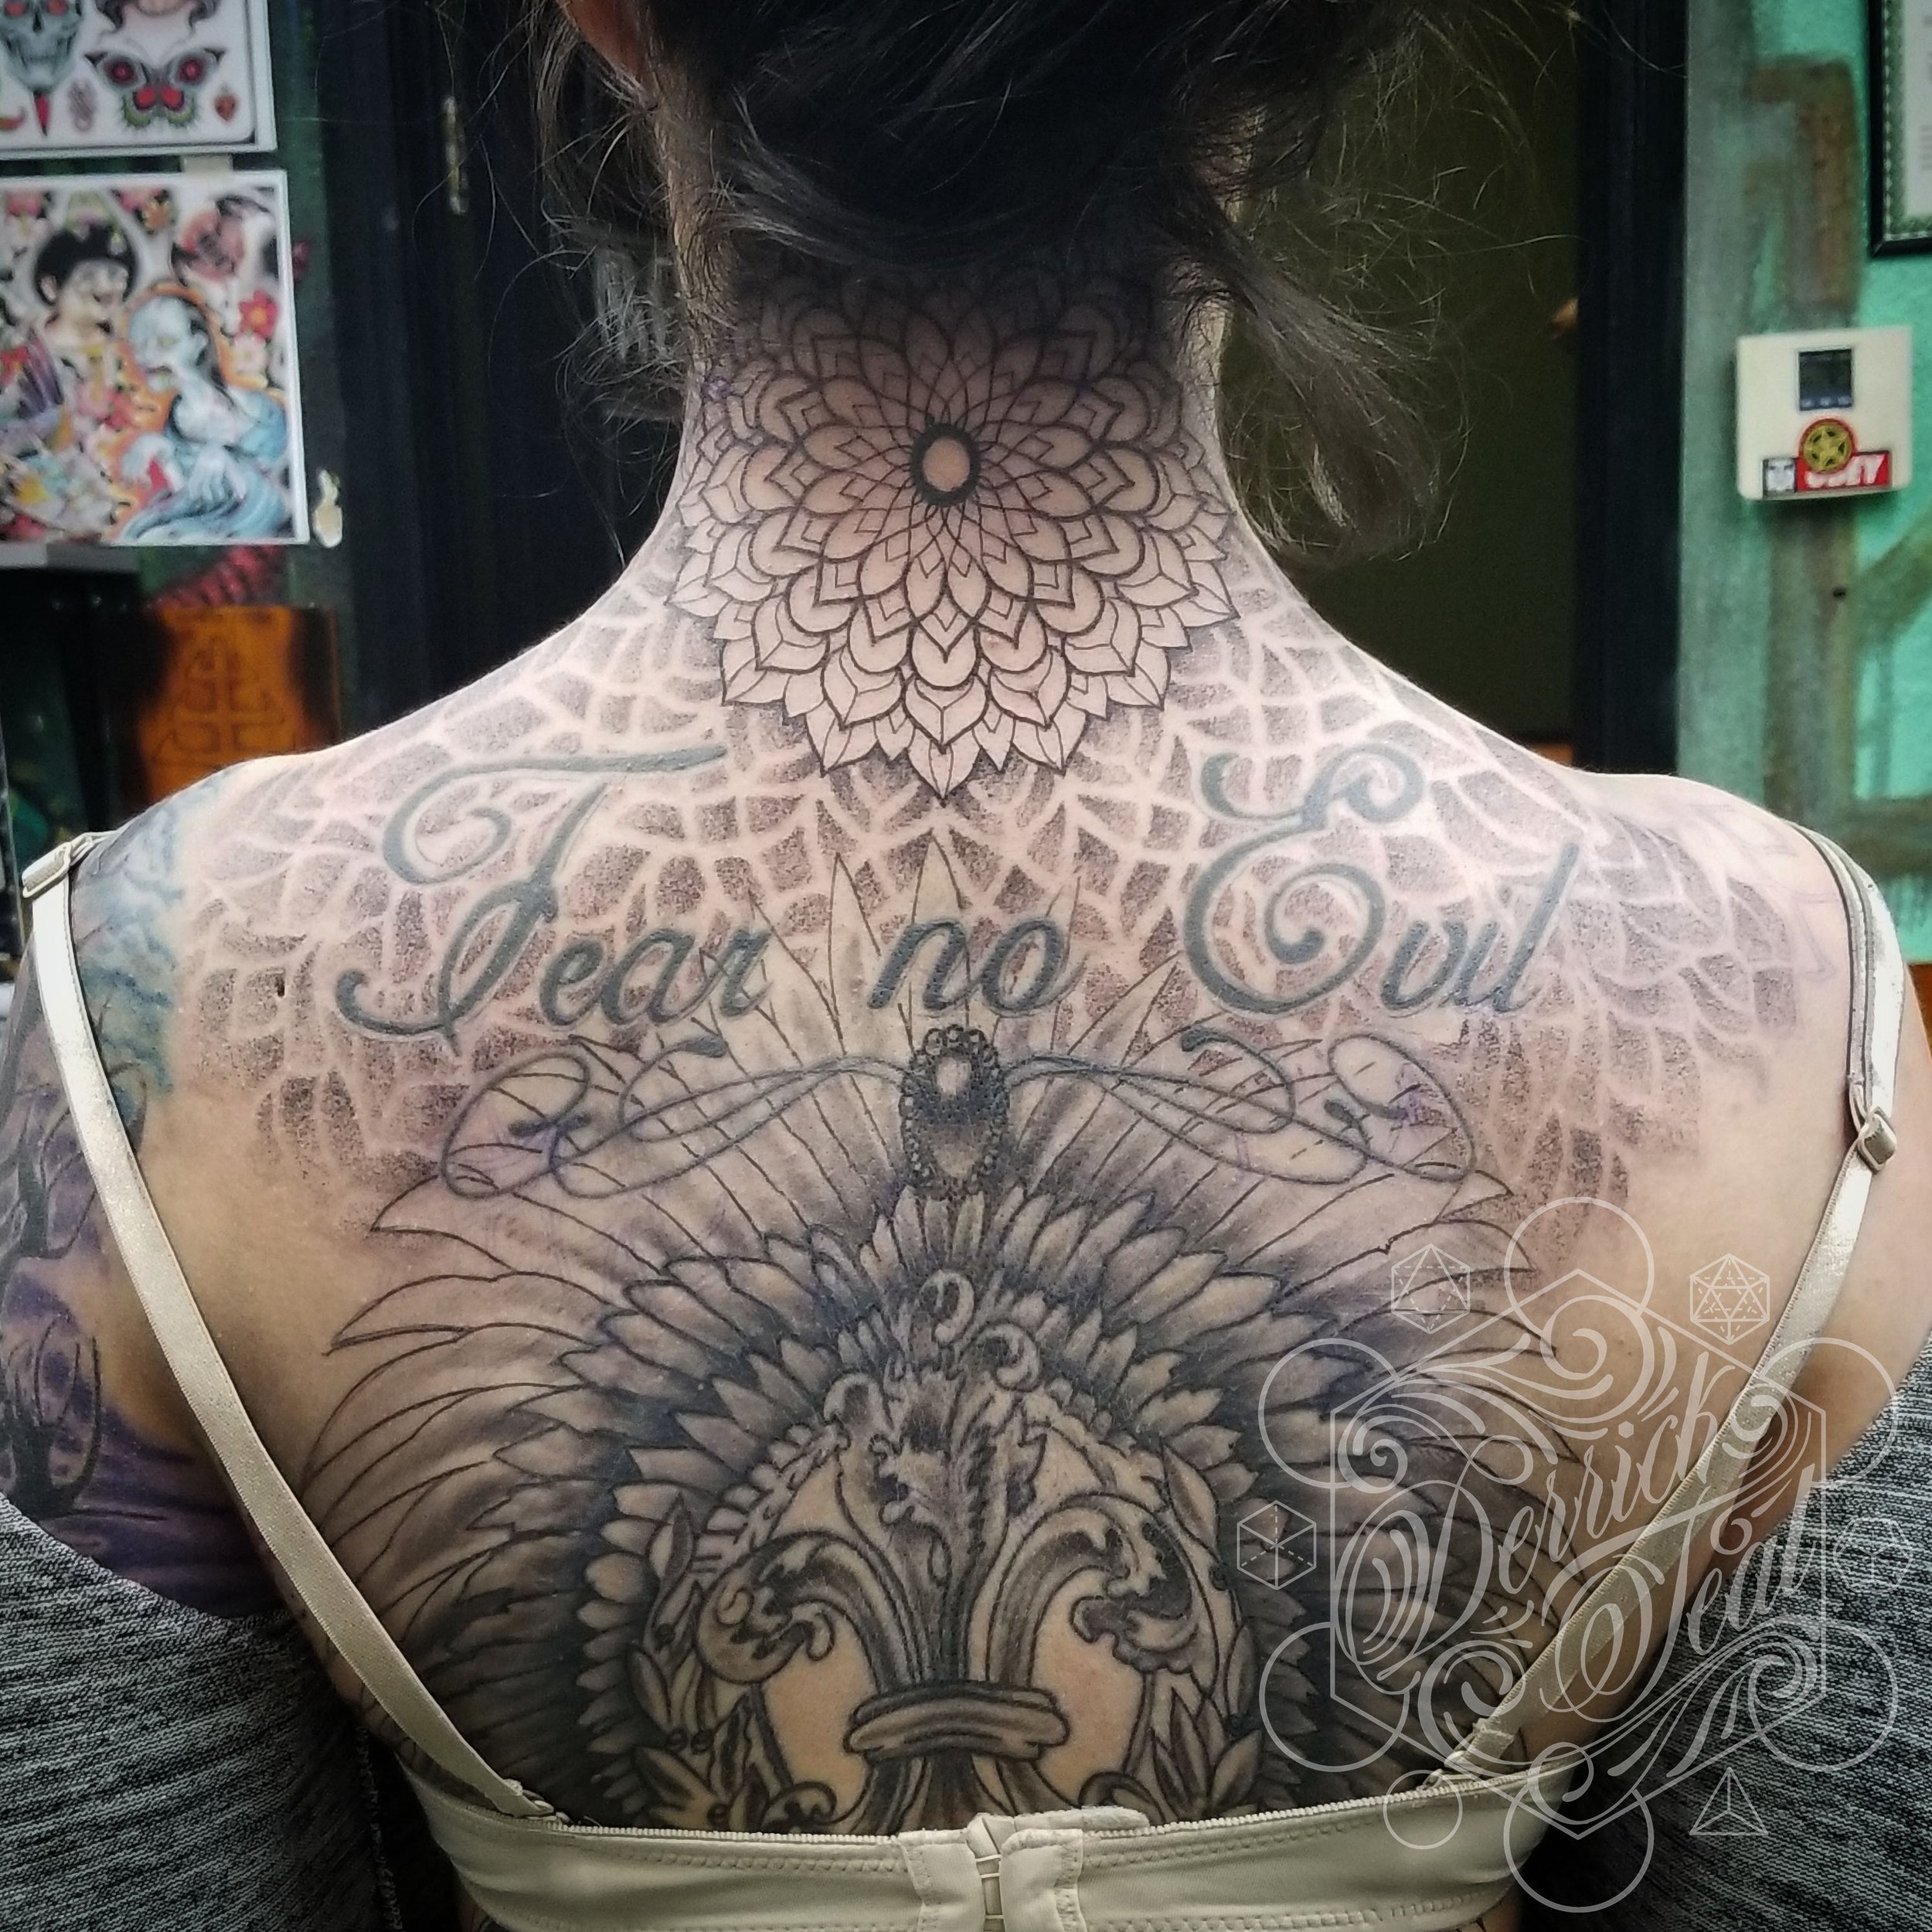 Rebecca Cameron Tattoos